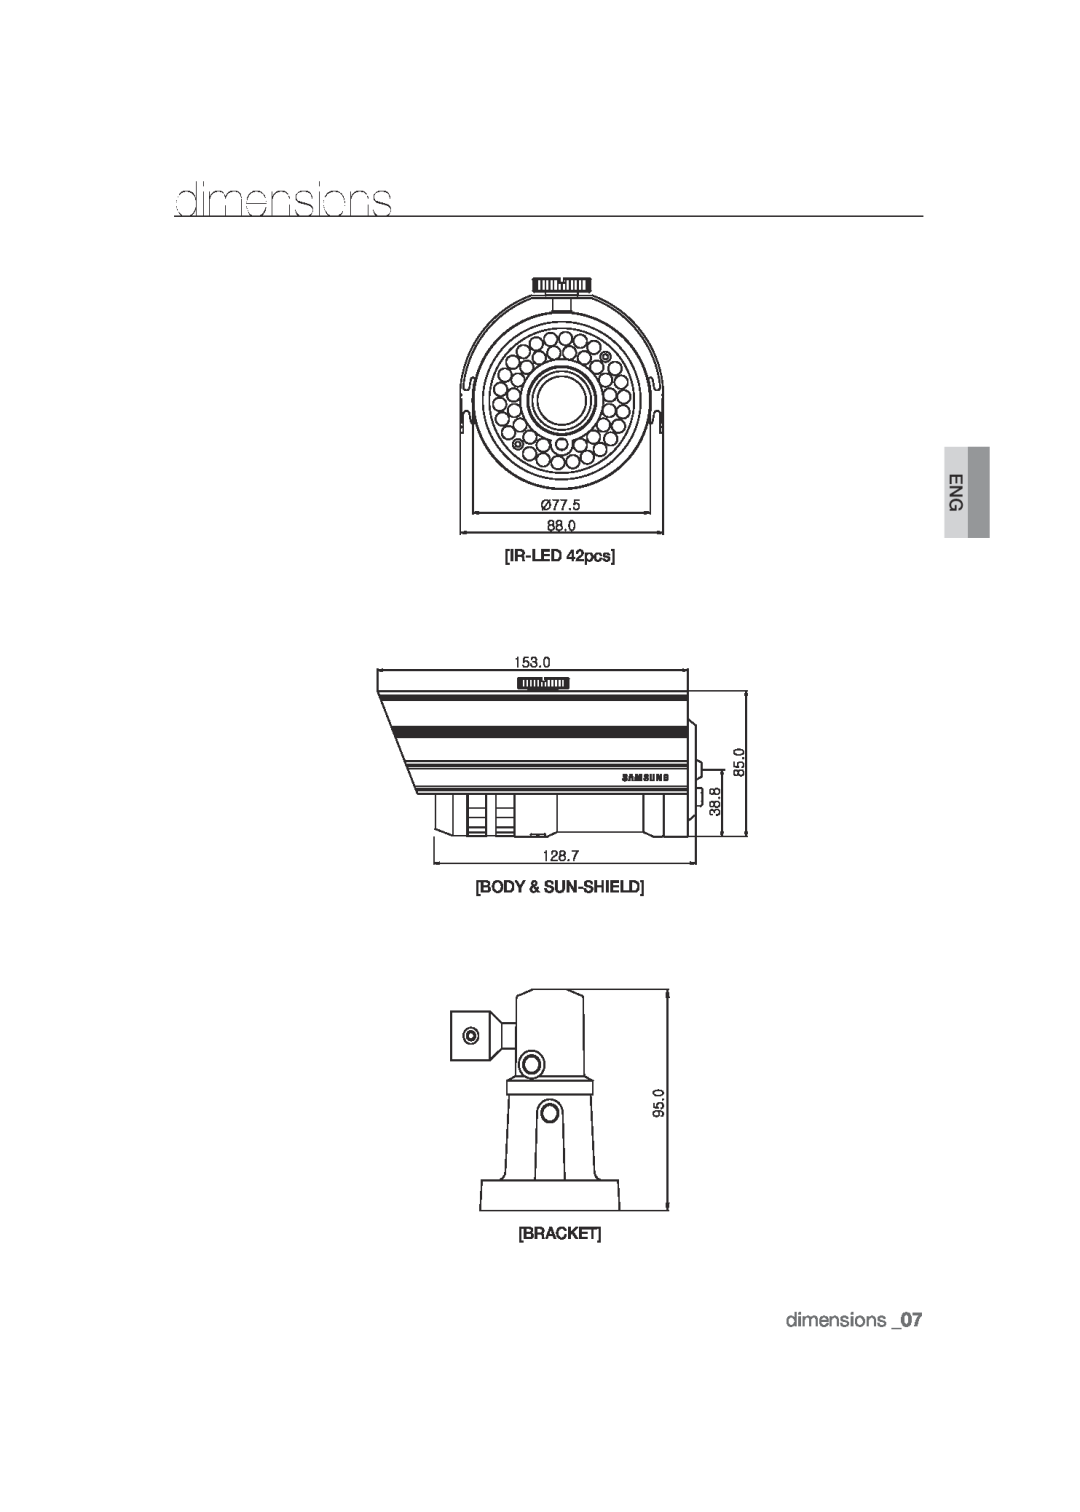 Samsung SCC-B9372P manual dimensions, IR-LED 42pcs BODY & SUN-SHIELD BRACKET 